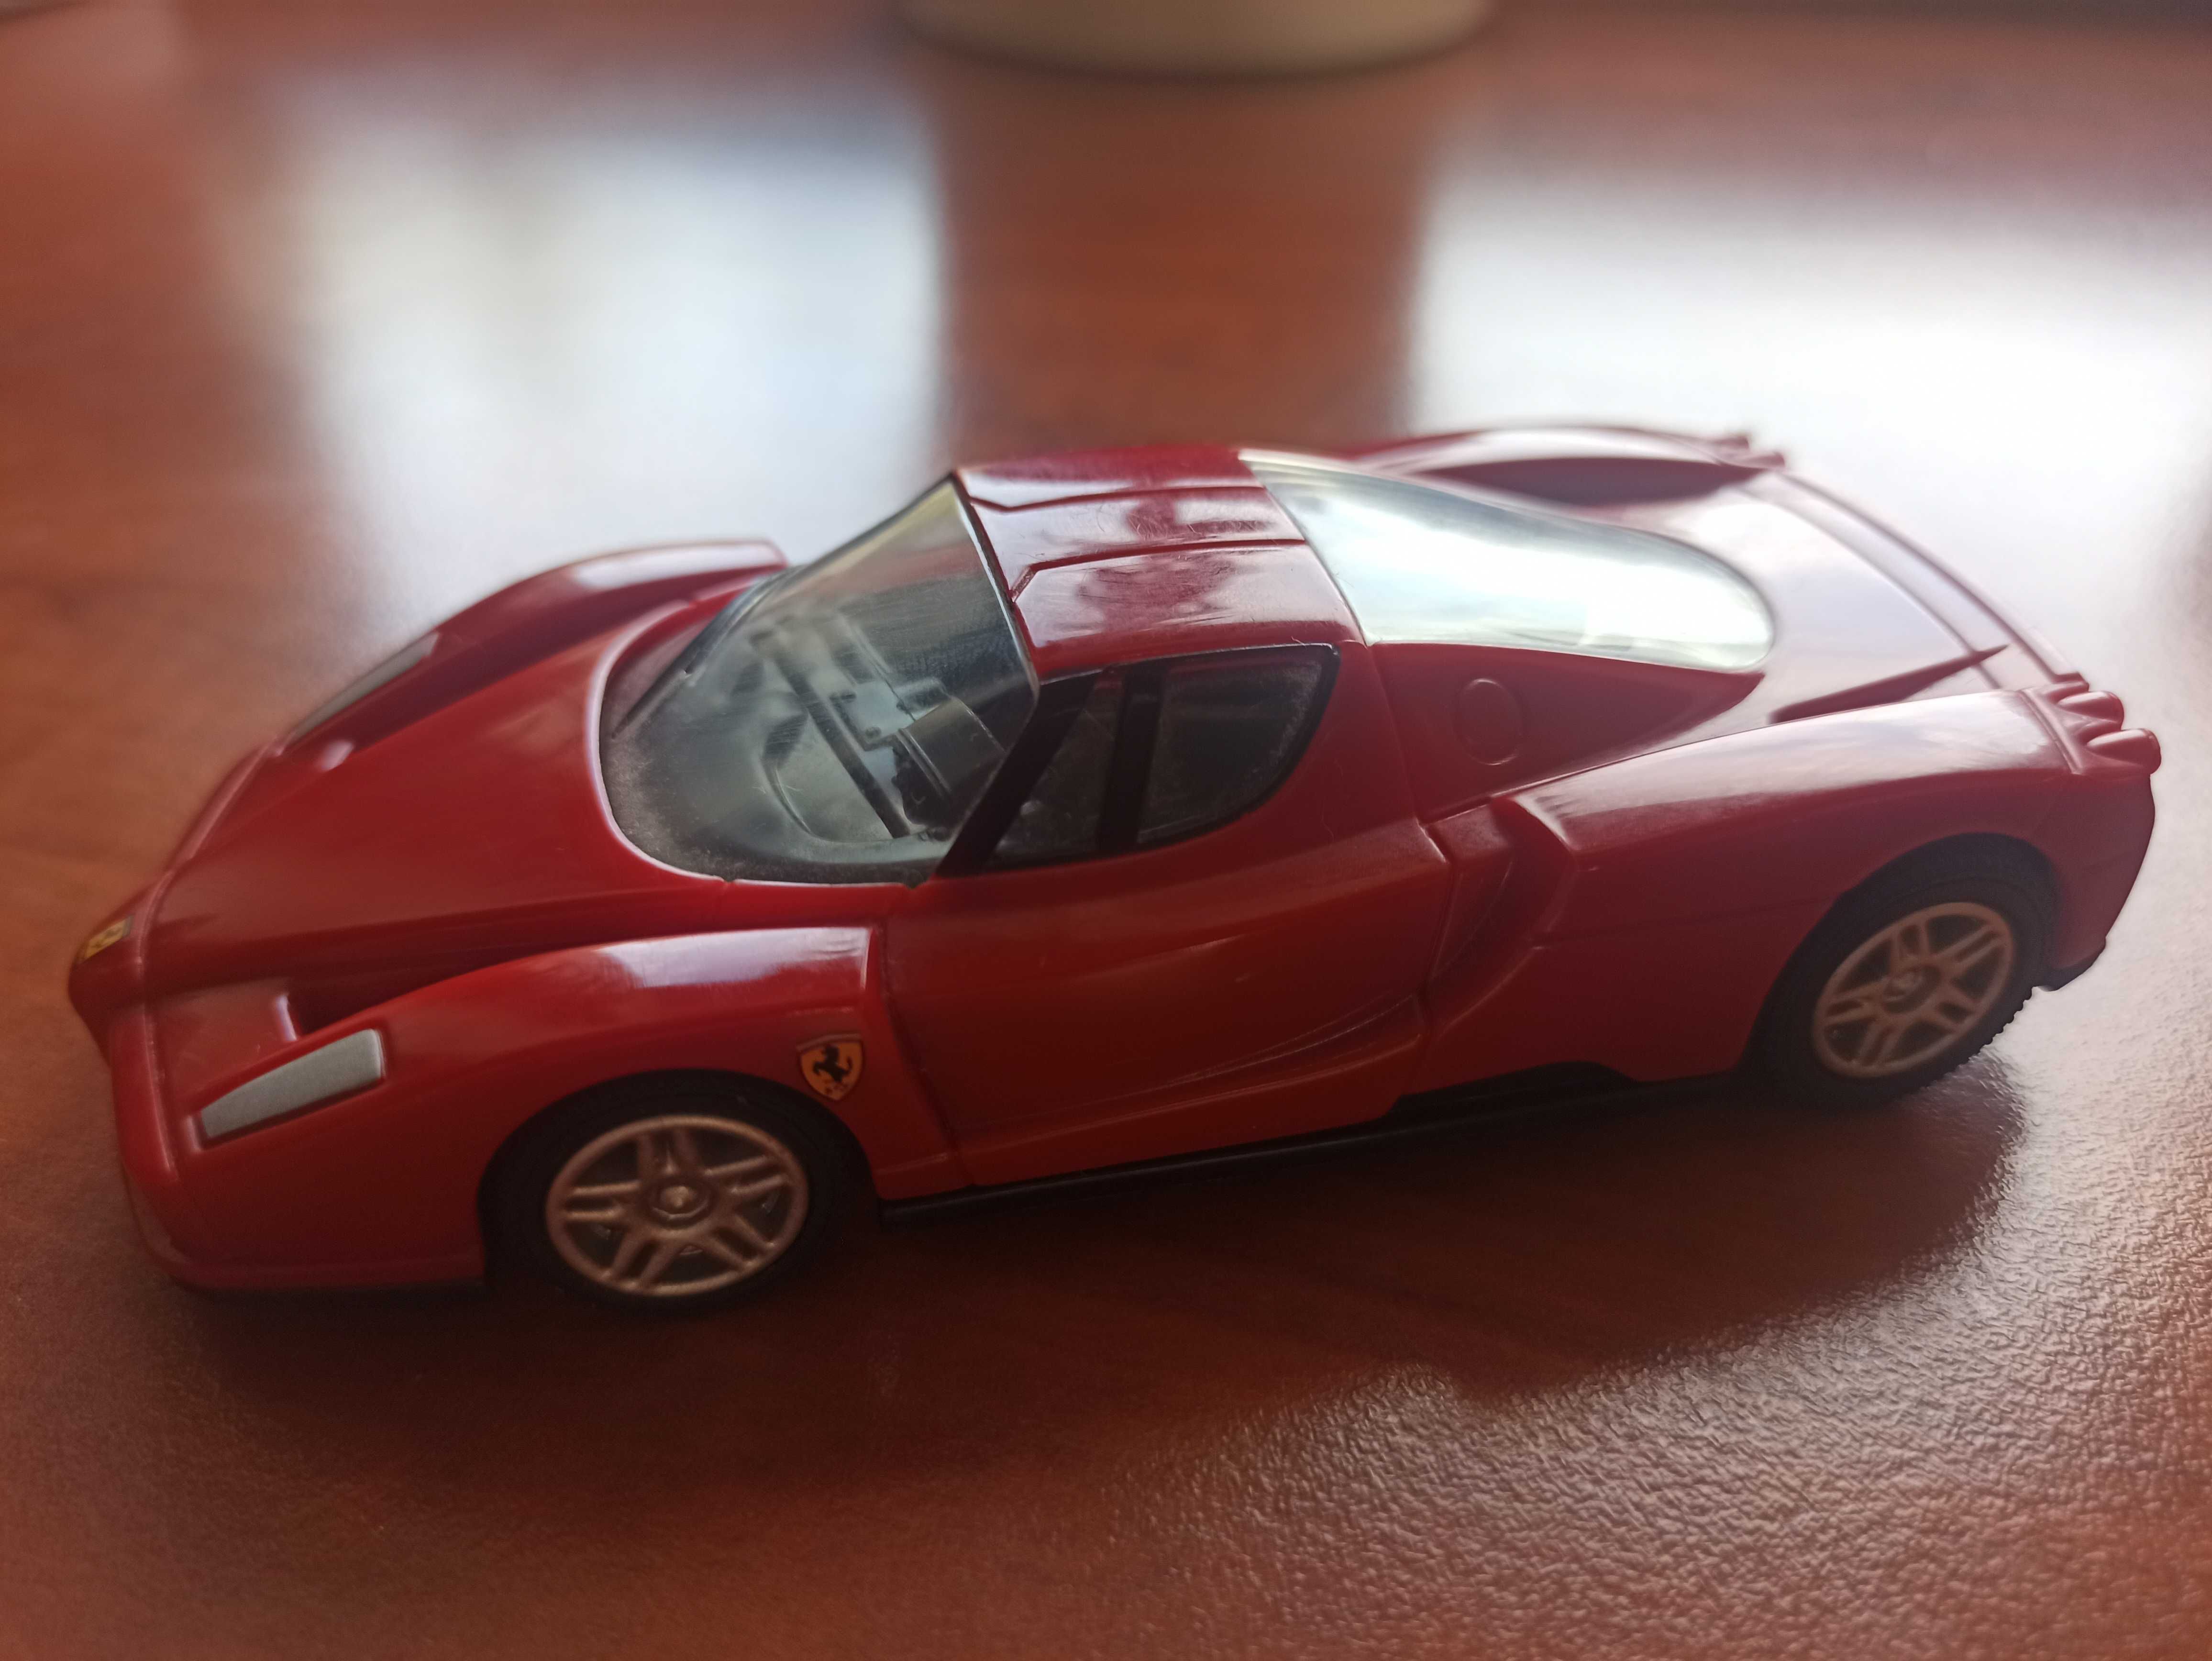 Ferrari Enzo. Seria Shell V-Power. 1:38